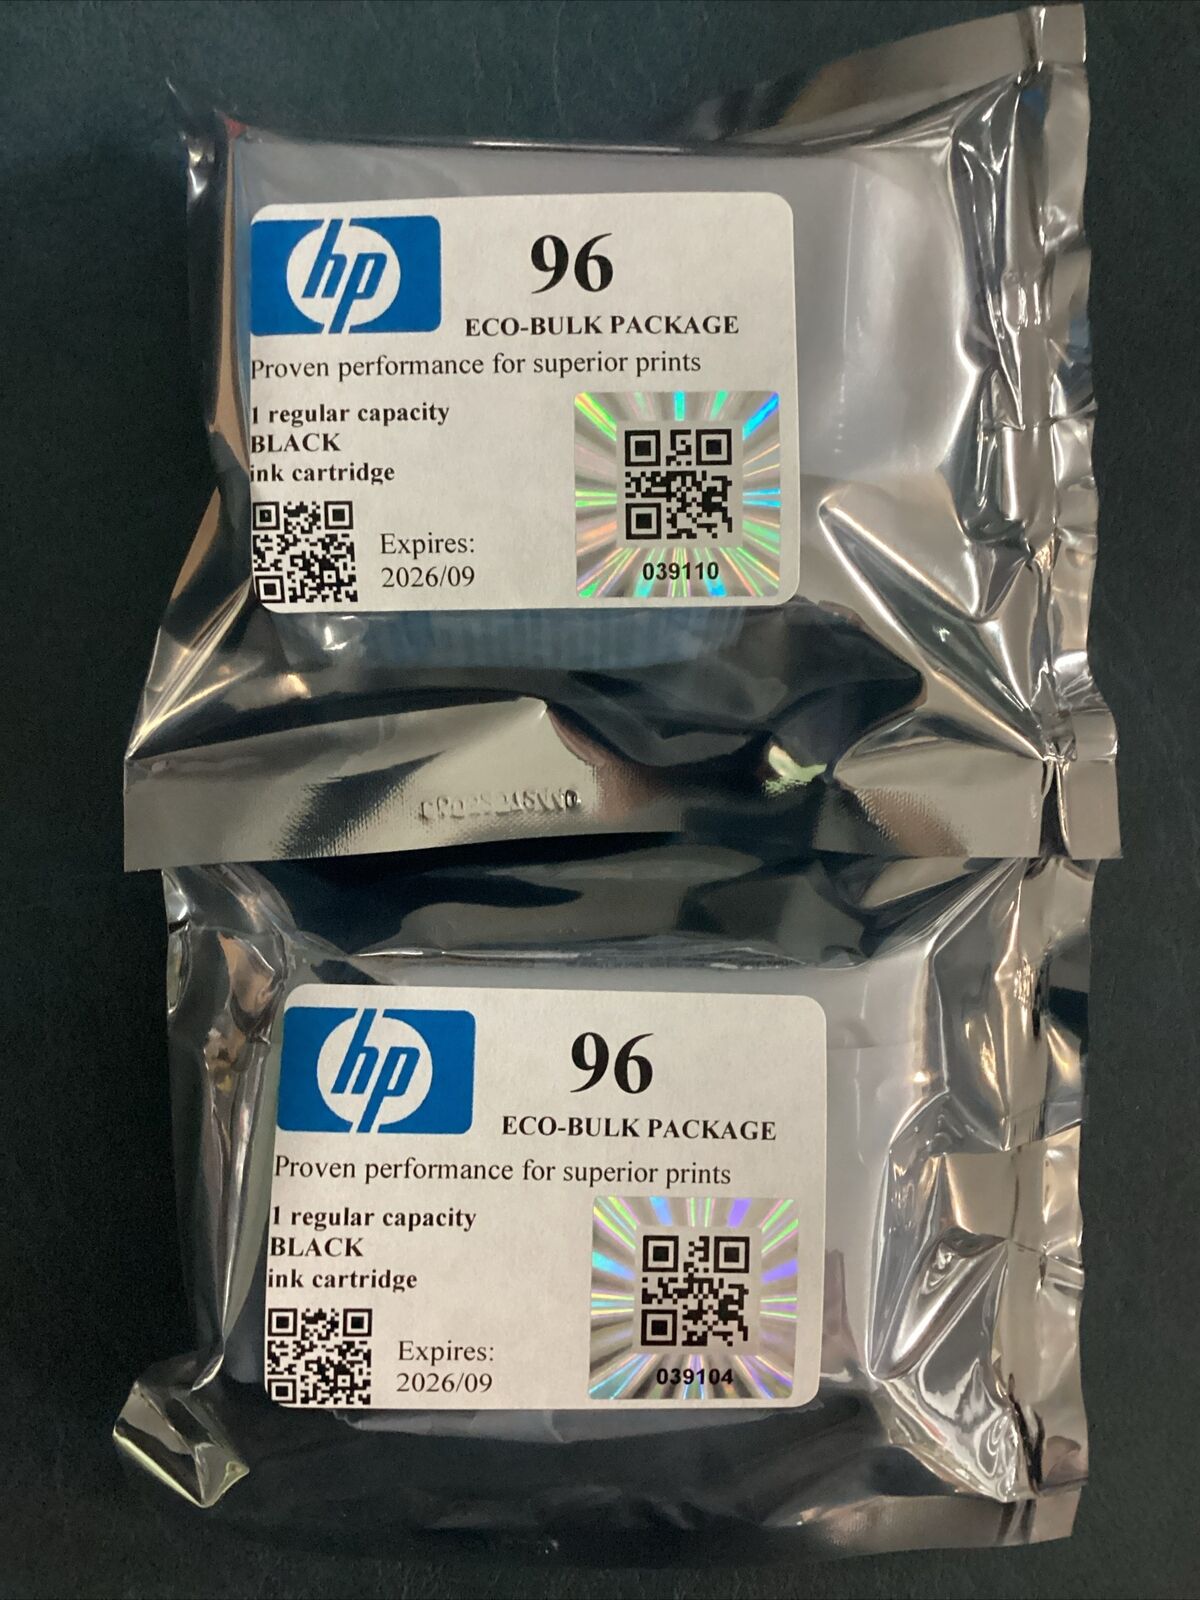 HP 96 - Black - (Quantity 2)- ECO-BULK PACKAGING - Genuine NEW - 